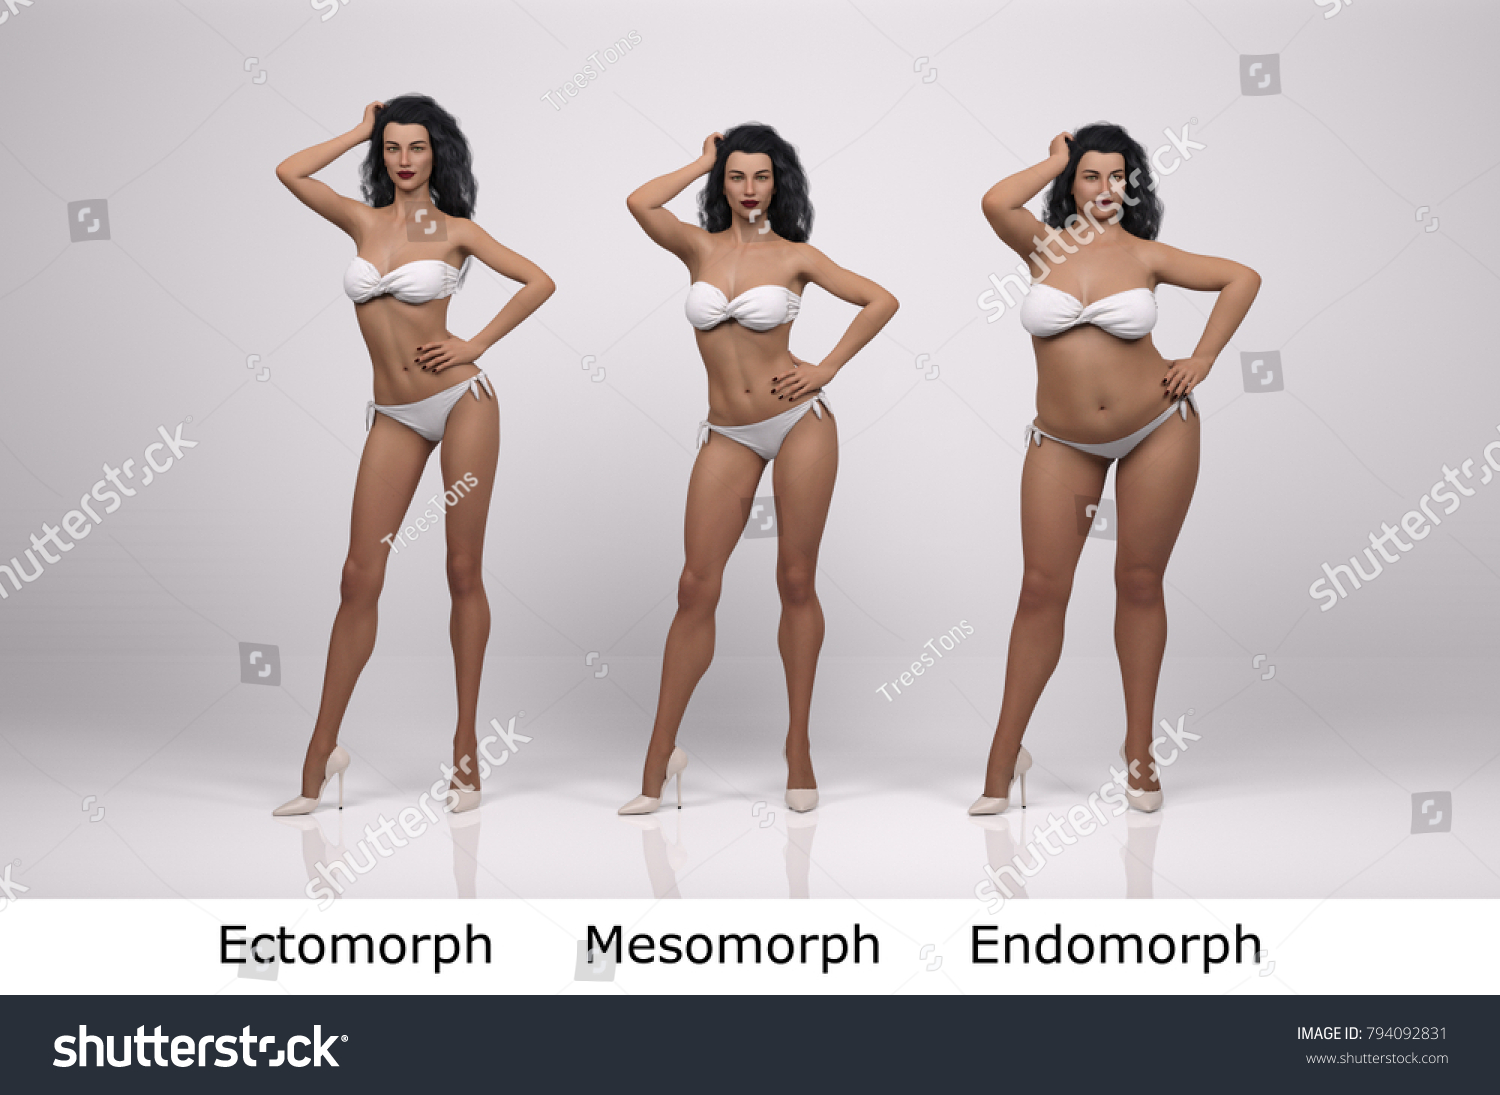 Мезоморфный Тип телосложения у женщин